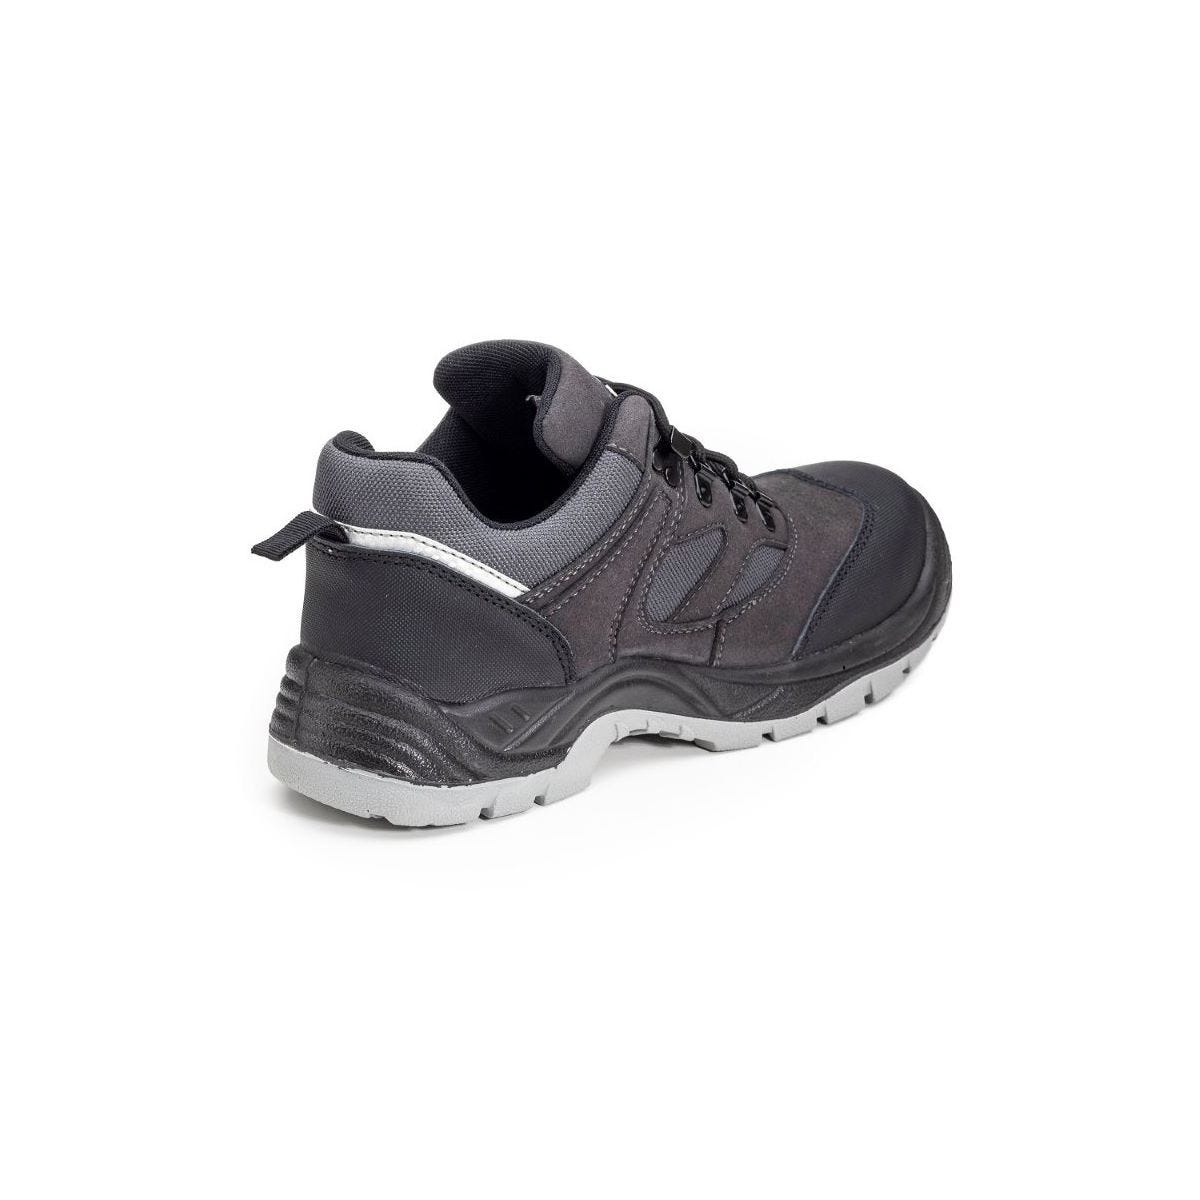 Chaussures sécurité SILVER Basse Anthracite - Coverguard - Taille 41 2